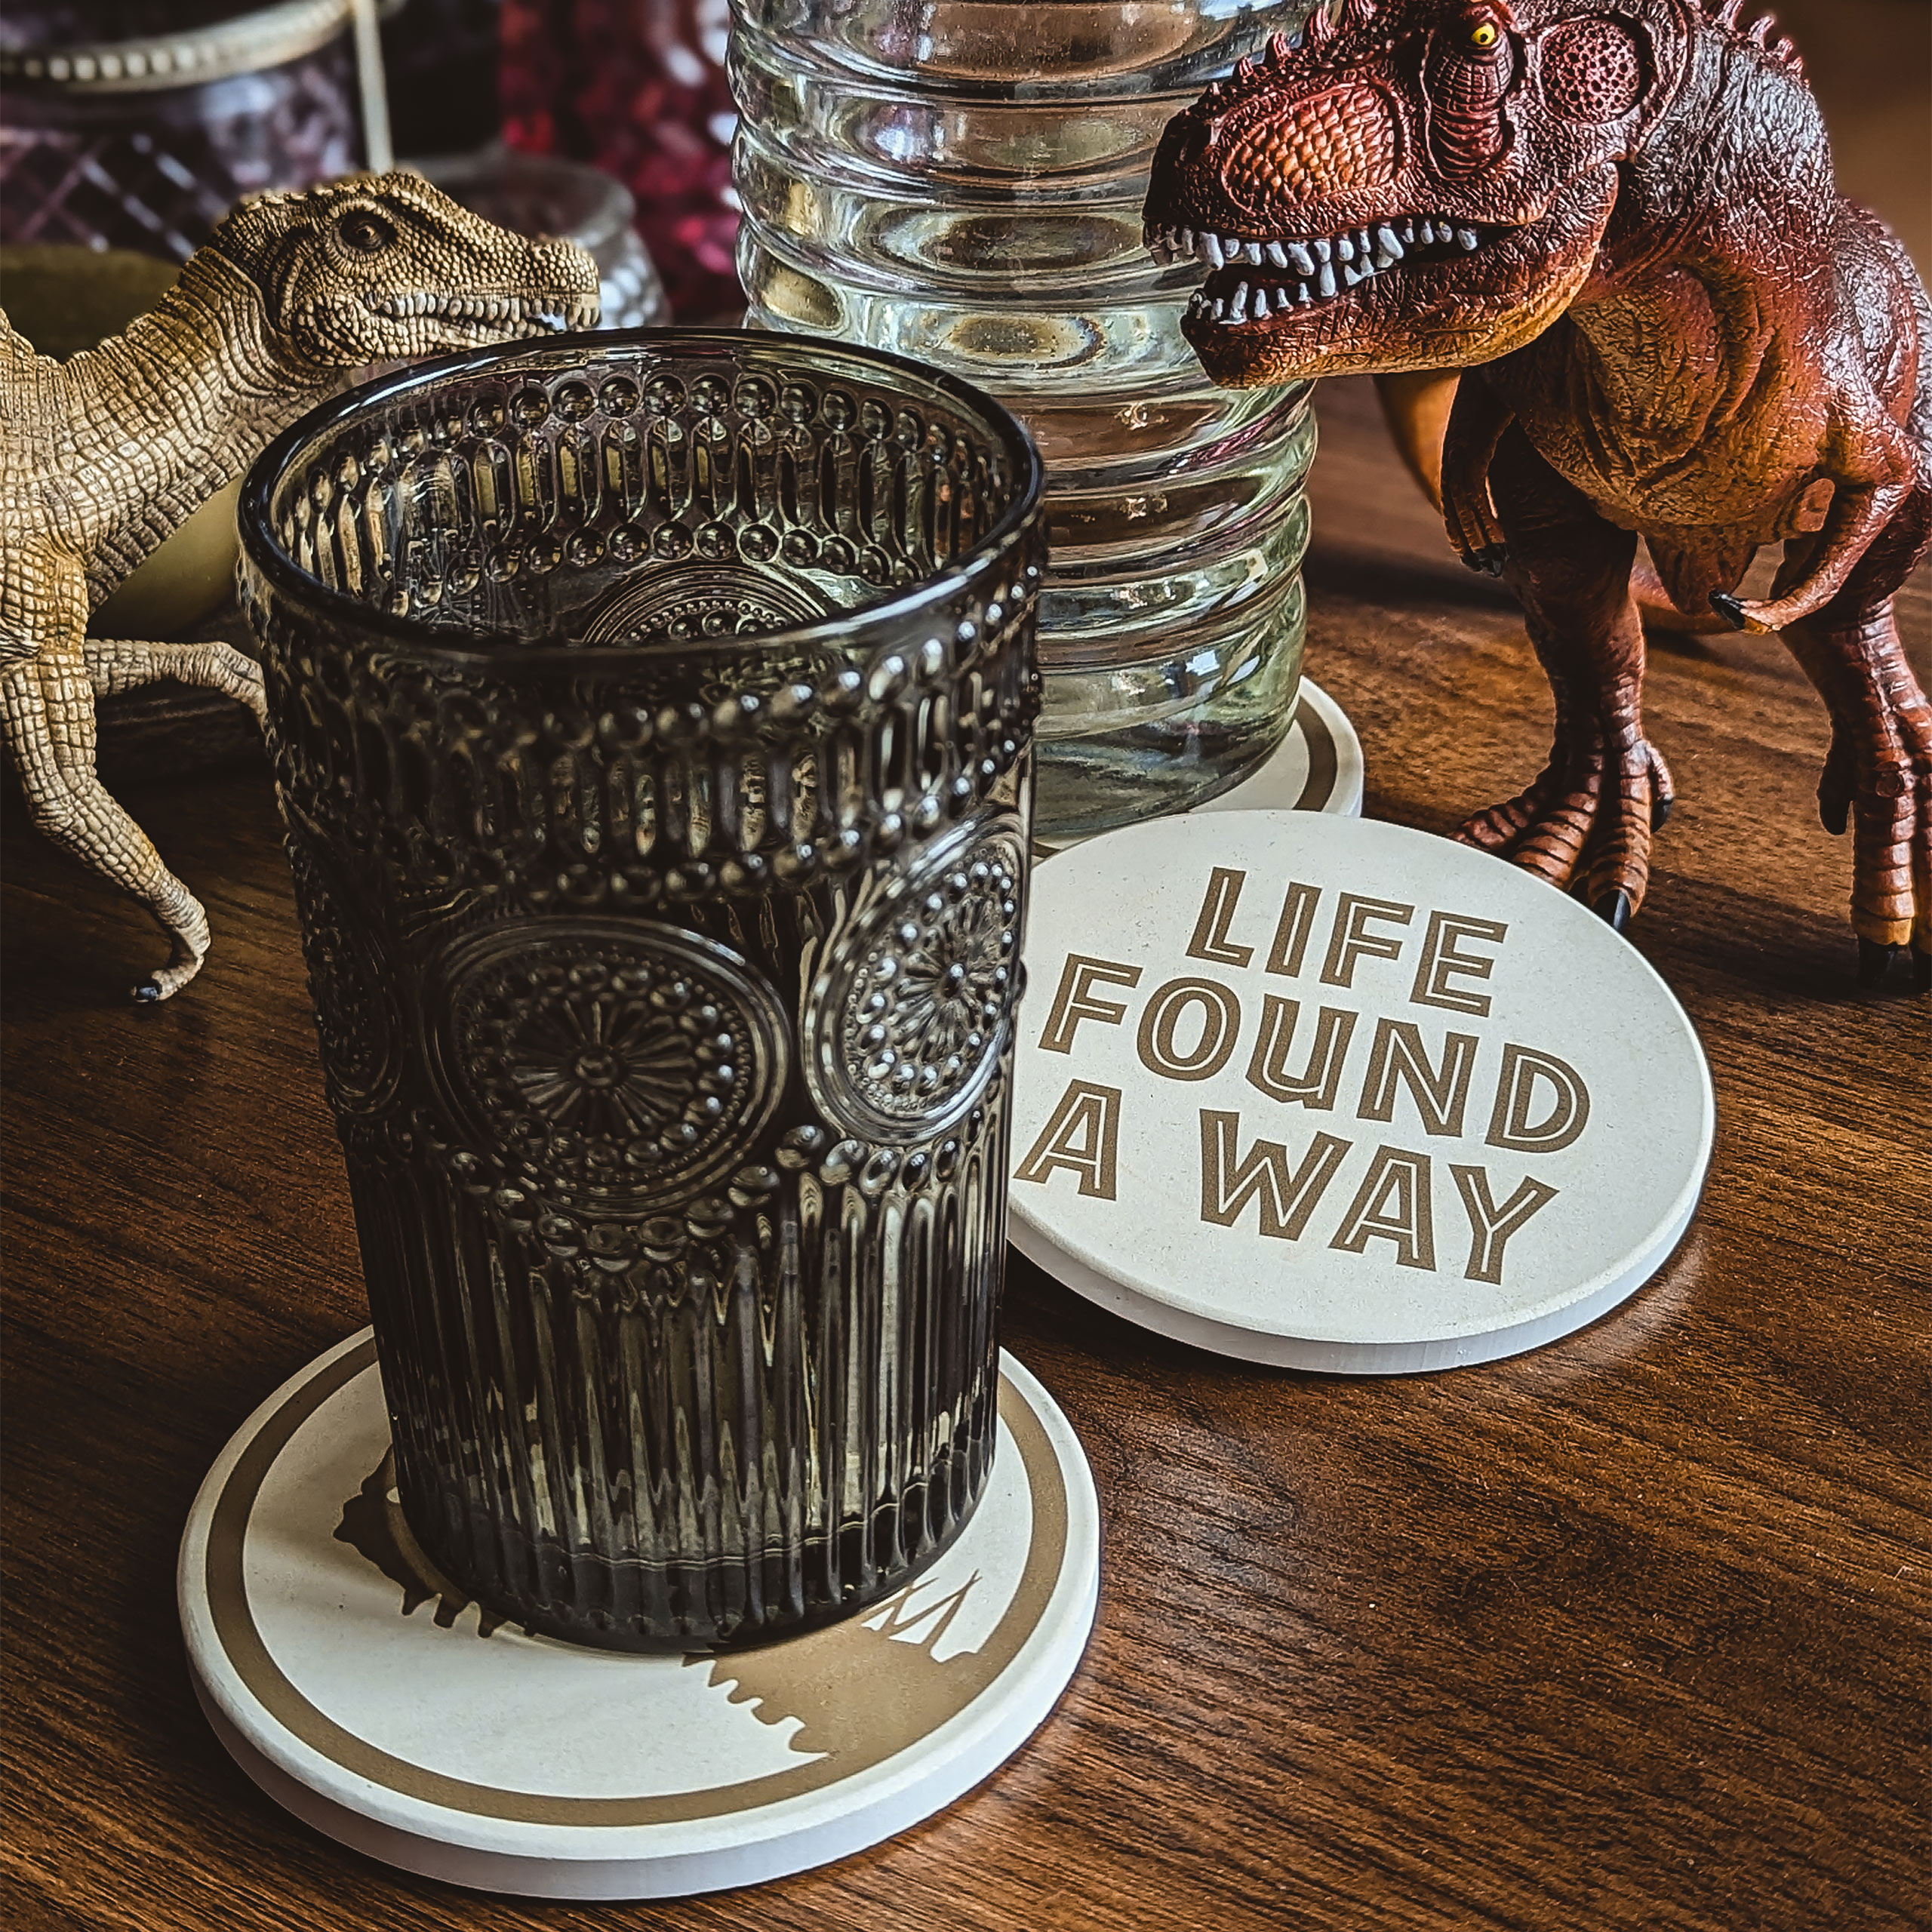 Jurassic Park - Life Found A Way Coaster Set of 4